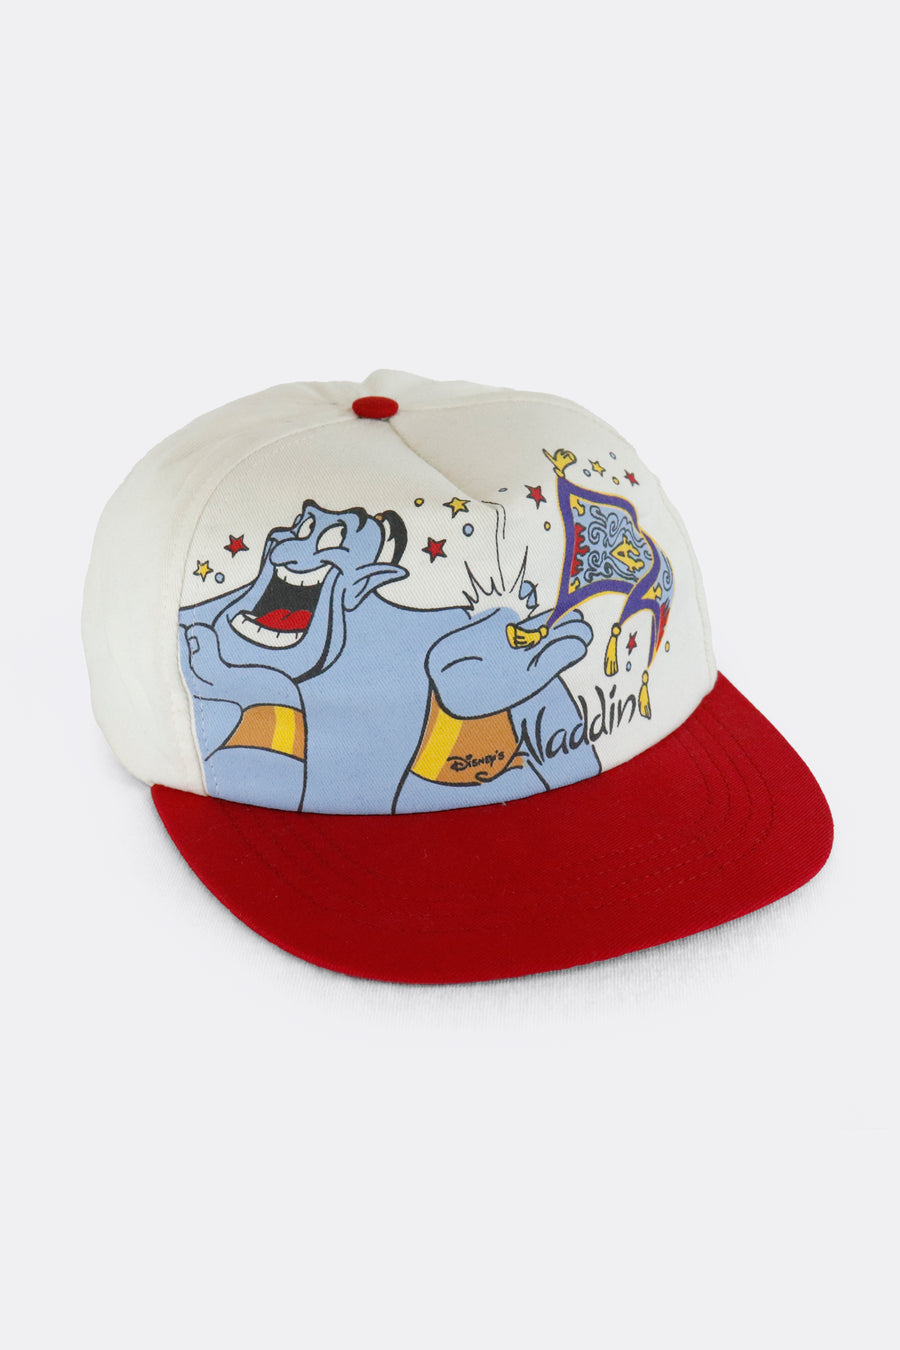 Vintage Disney Aladdin Snapback Hat